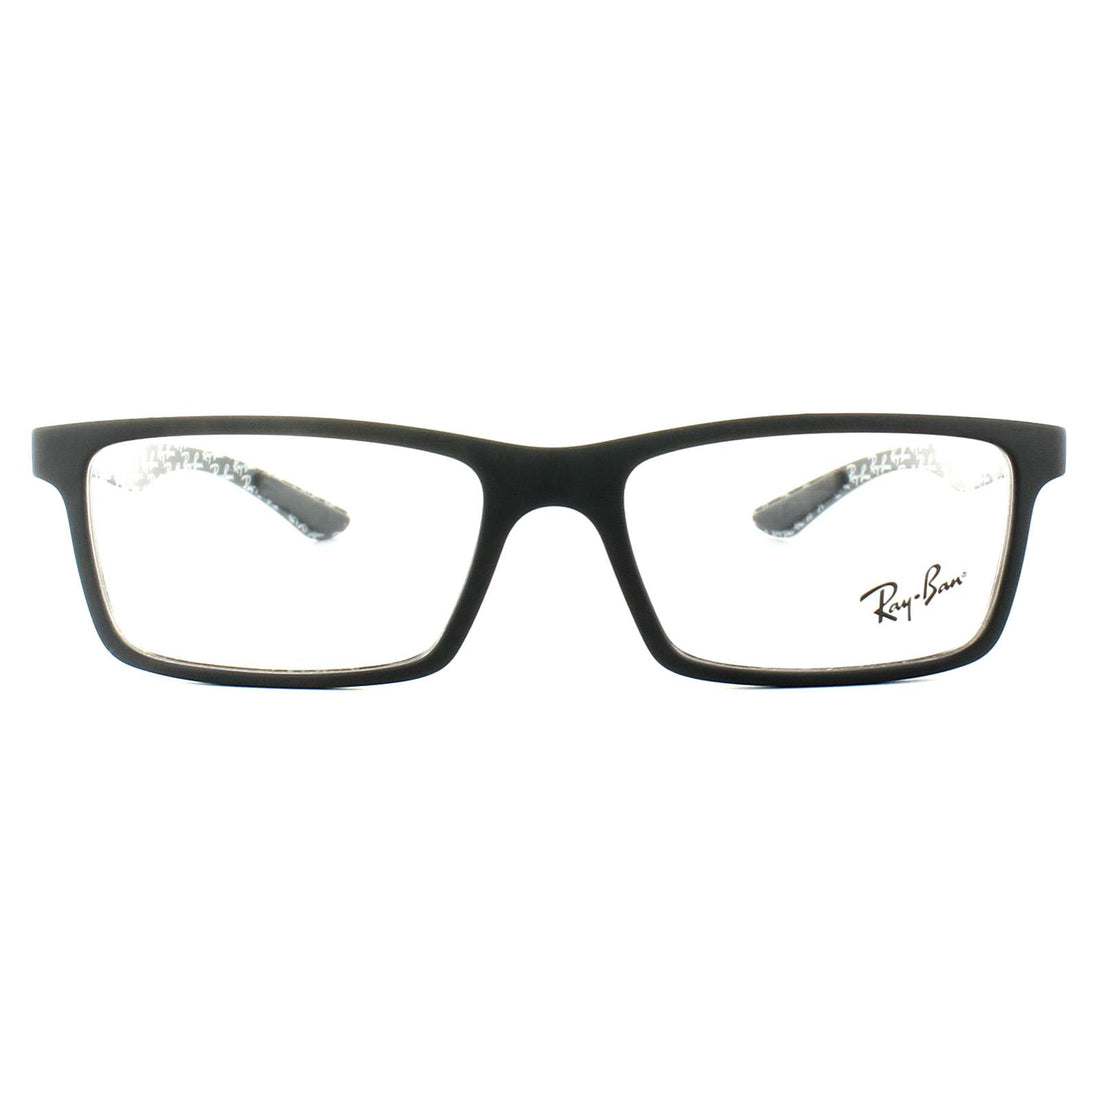 Ray-Ban 8901 Glasses Frames Demi Gloss Black